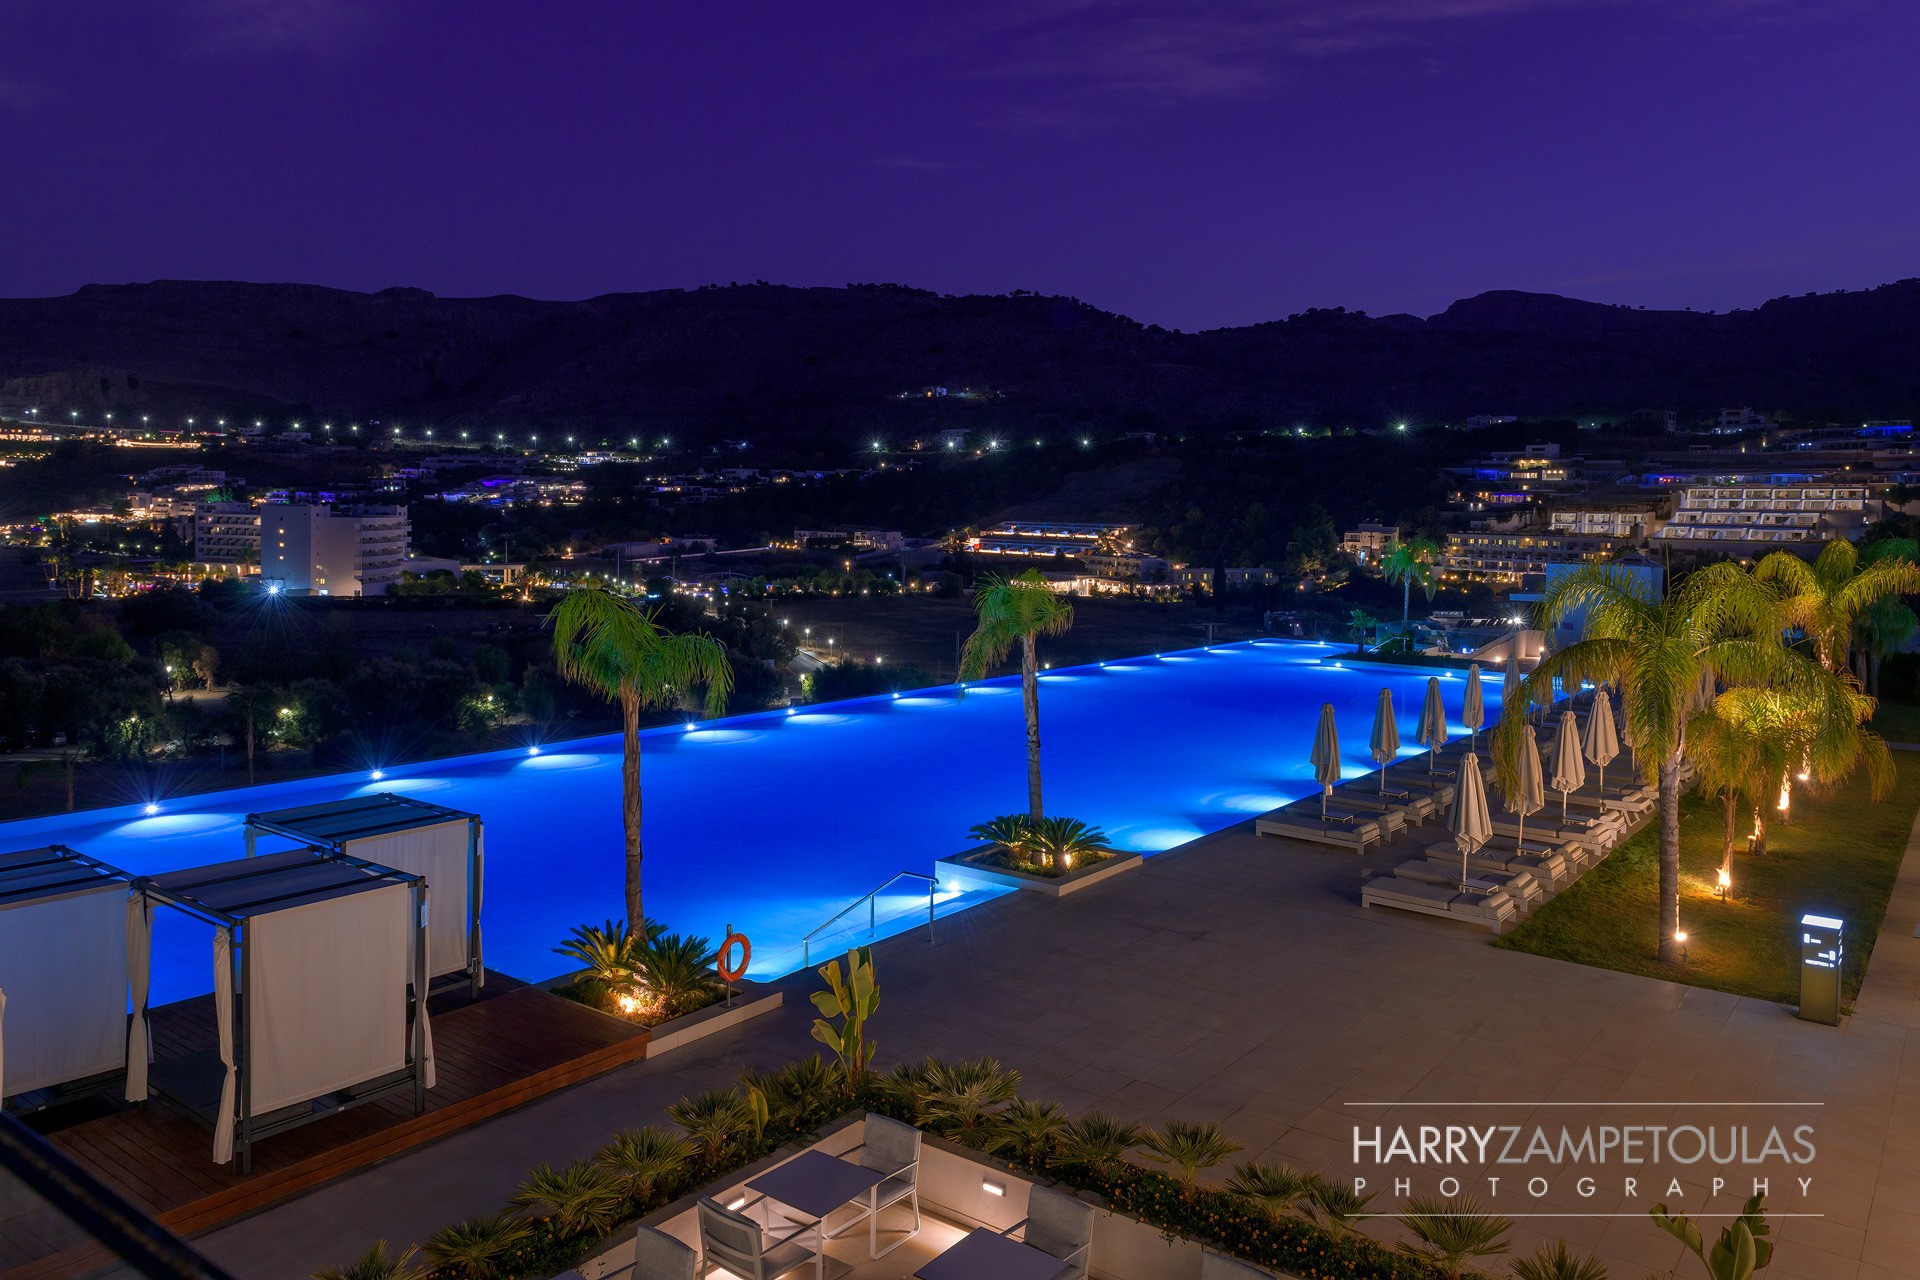 Harry-Zampetoulas-Photography-Lindos-Grand-12 Lindos Grand Resort & Spa - Hotel Photography by Harry Zampetoulas 